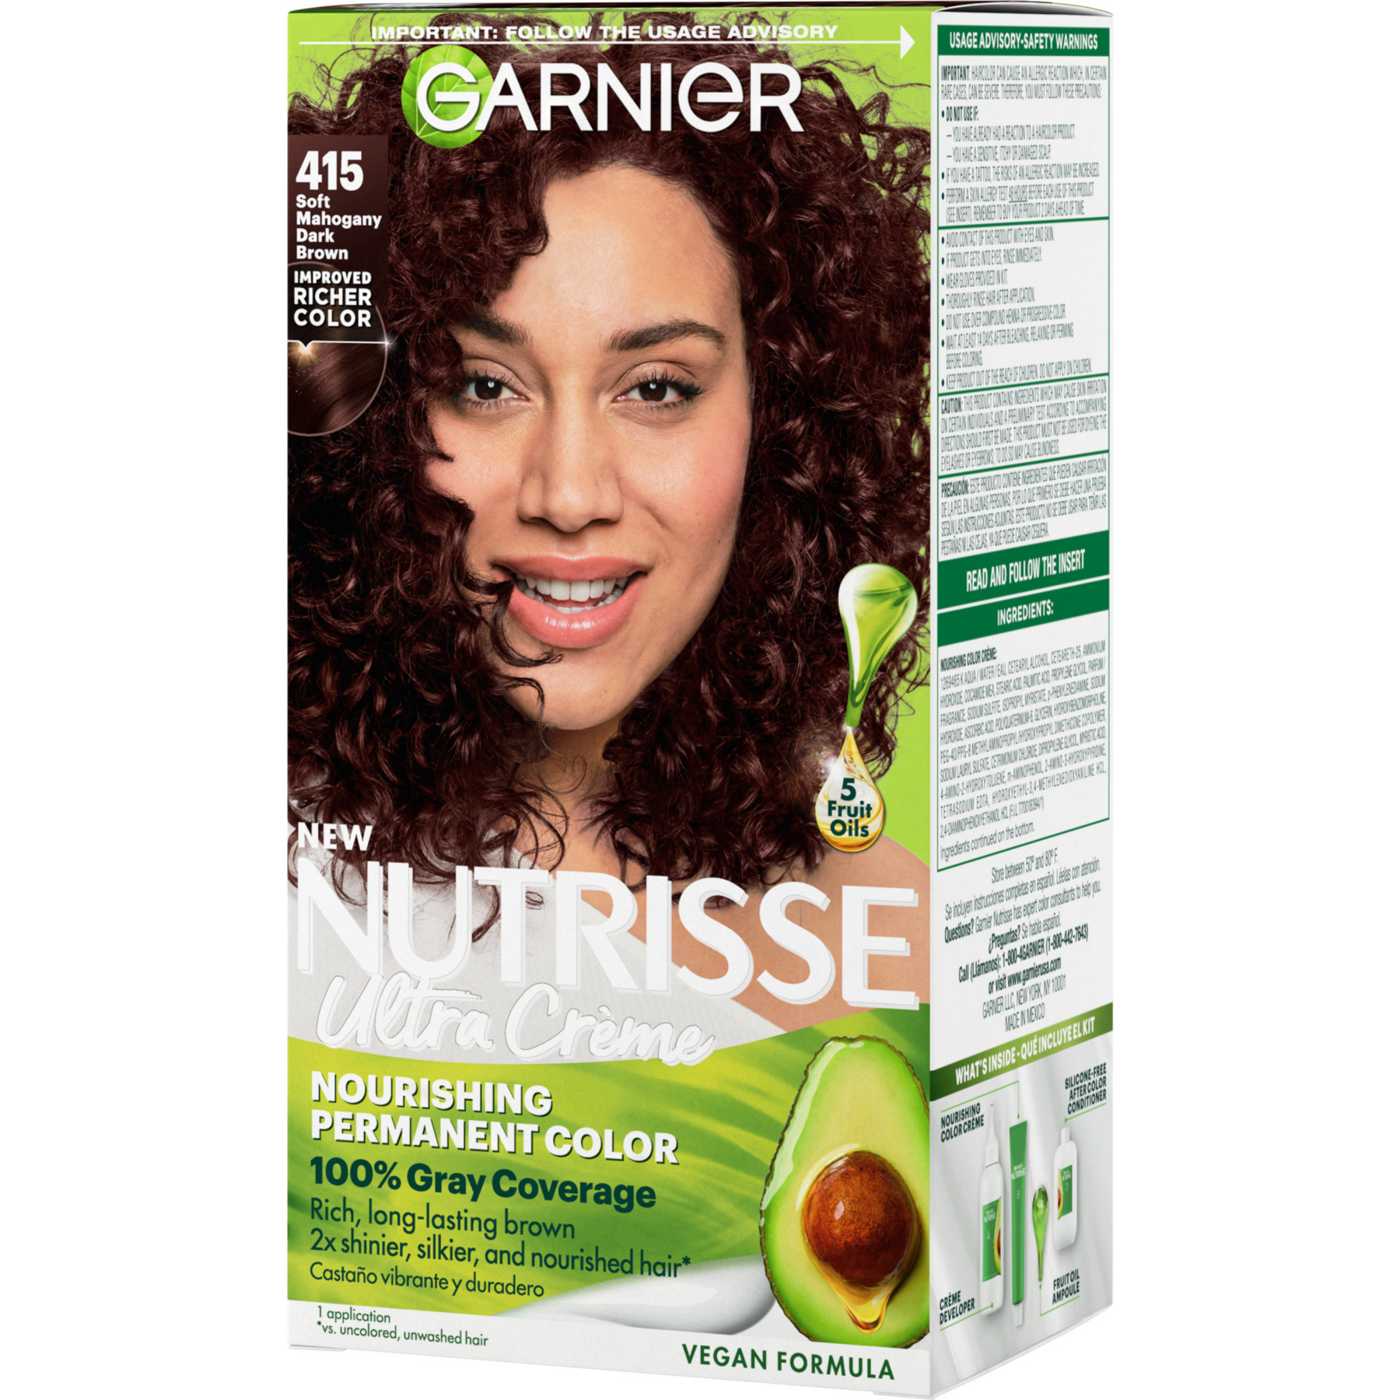 Garnier Nutrisse Nourishing Hair Color Creme - 415 Soft Mahogany Drk Brown (Raspberry Truffle); image 12 of 16